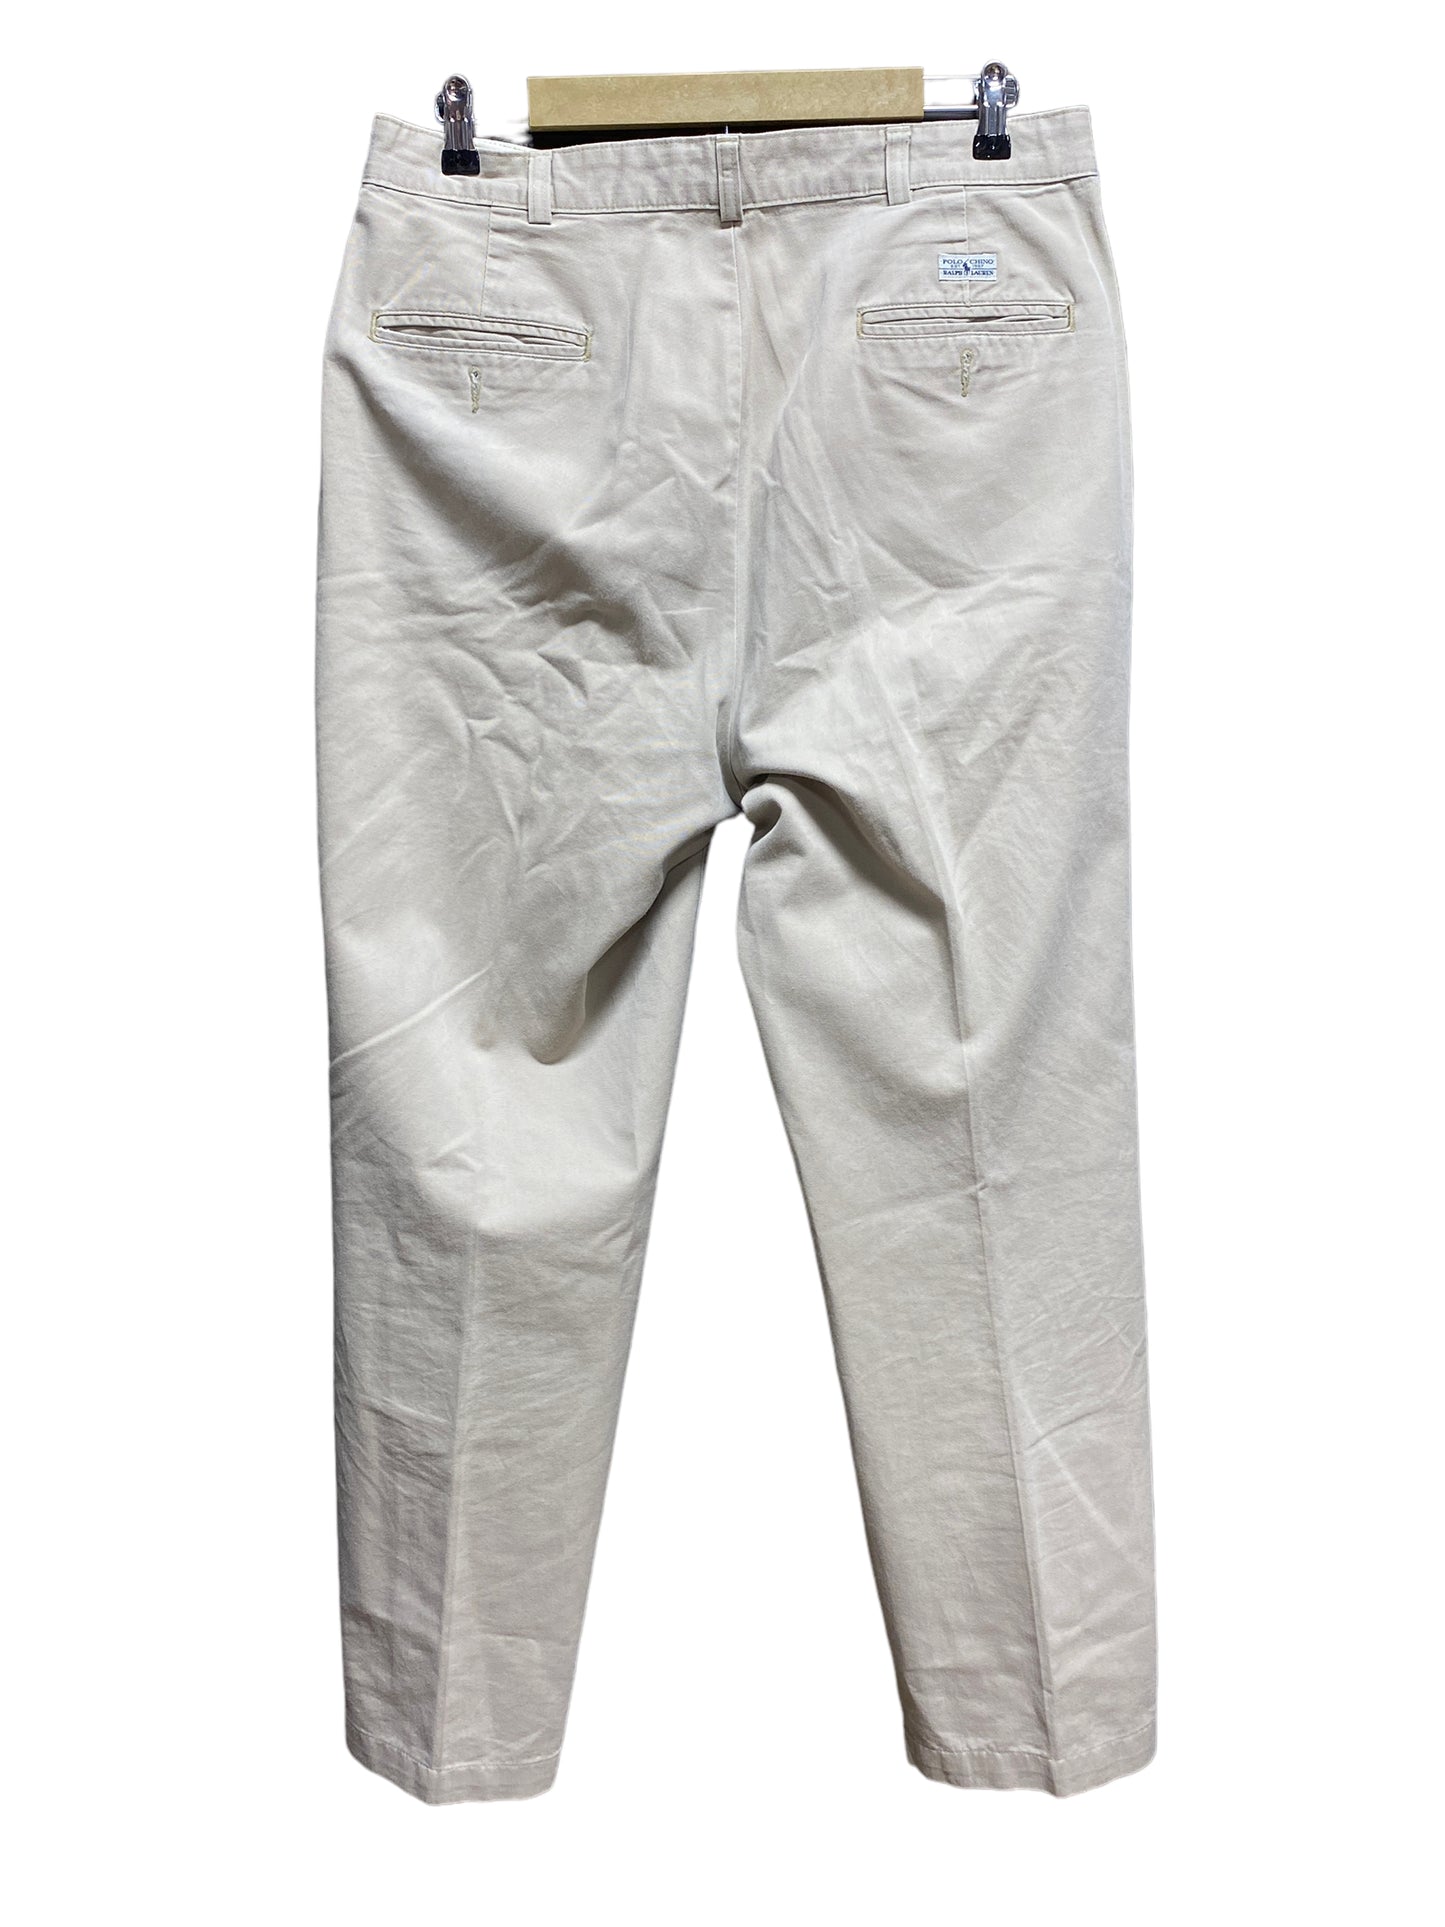 Vintage Polo Ralph Lauren Light Brown Chino Pants Size 32x32